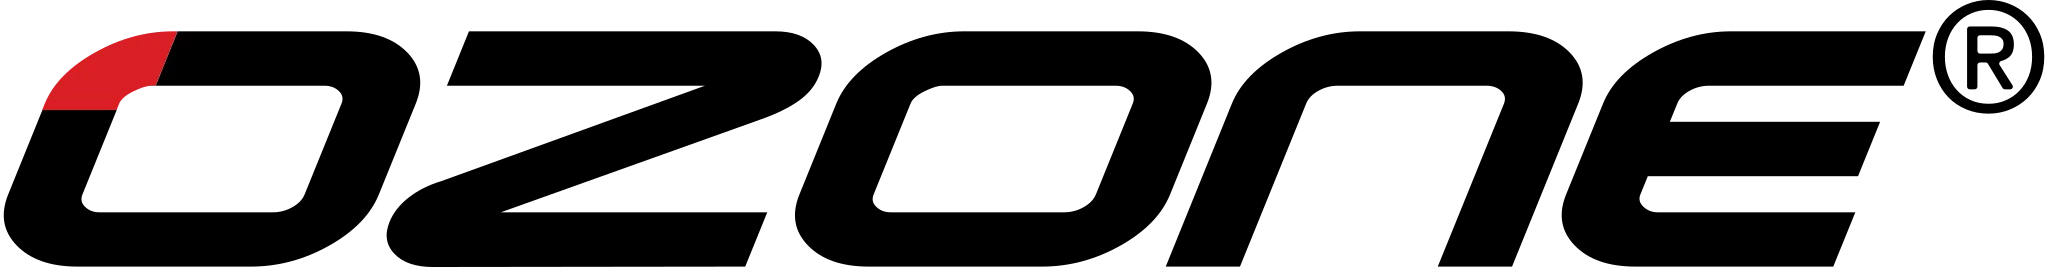 Logo ozone parapente